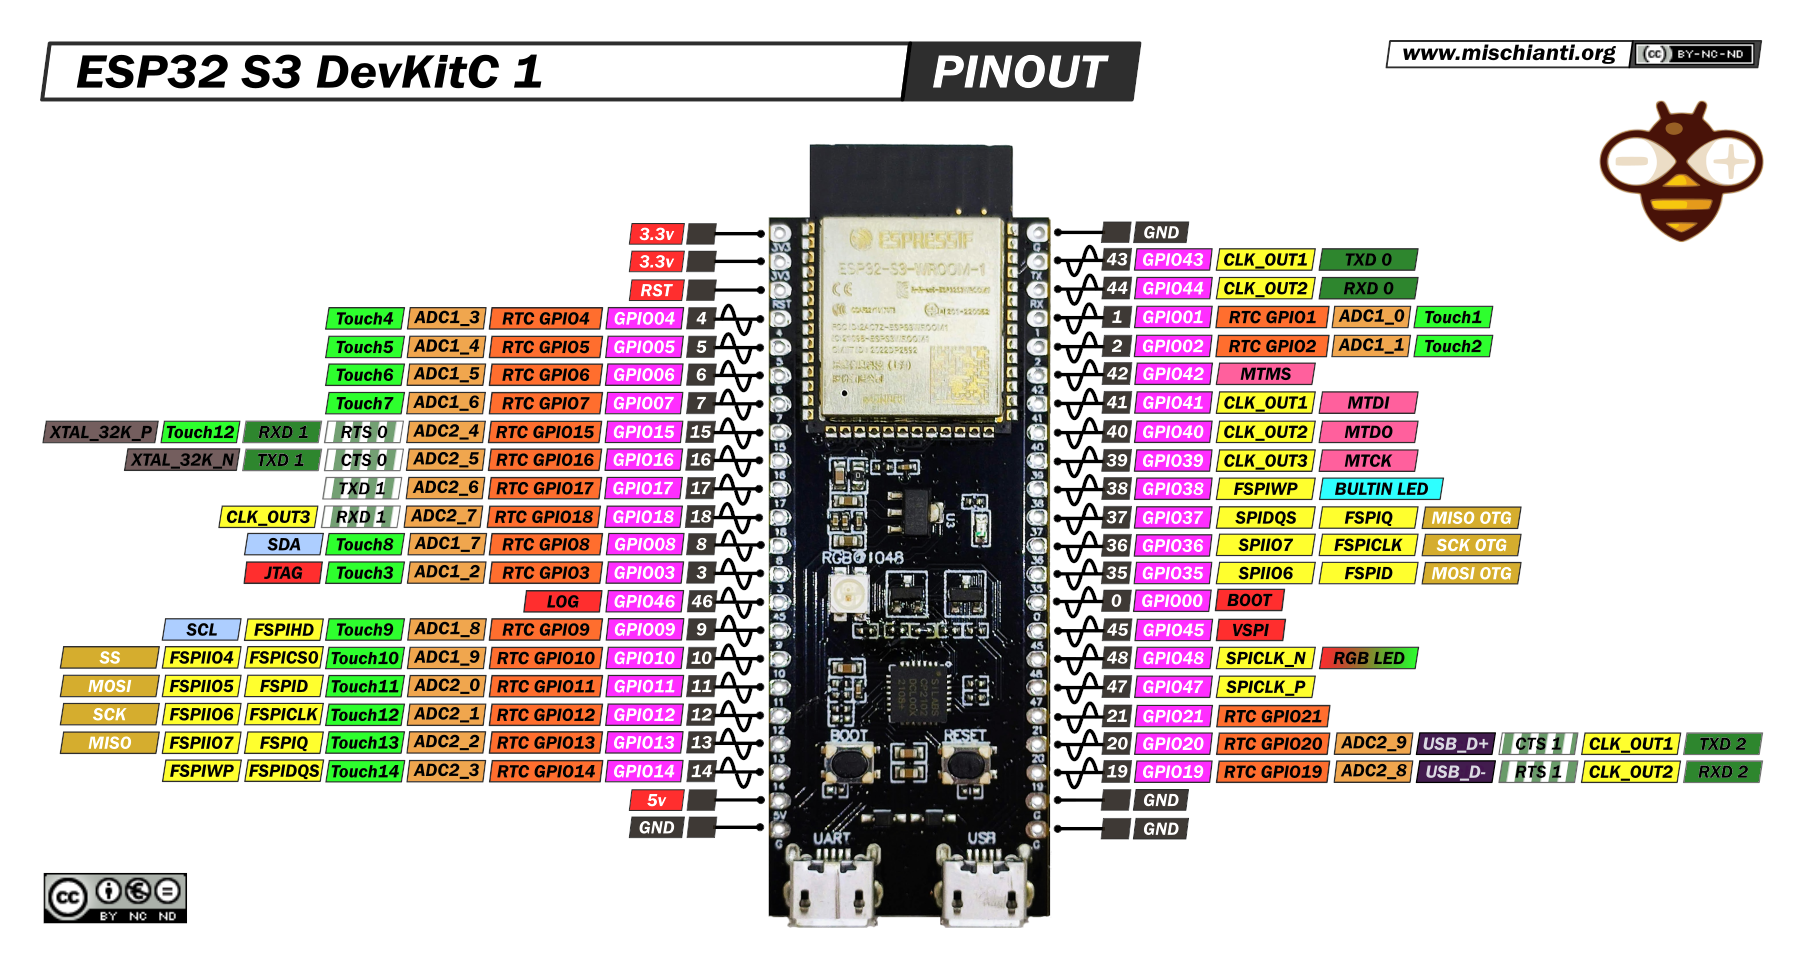 ESP32 S3 DevKitC 1: high-resolution pinout and specs – Renzo Mischianti